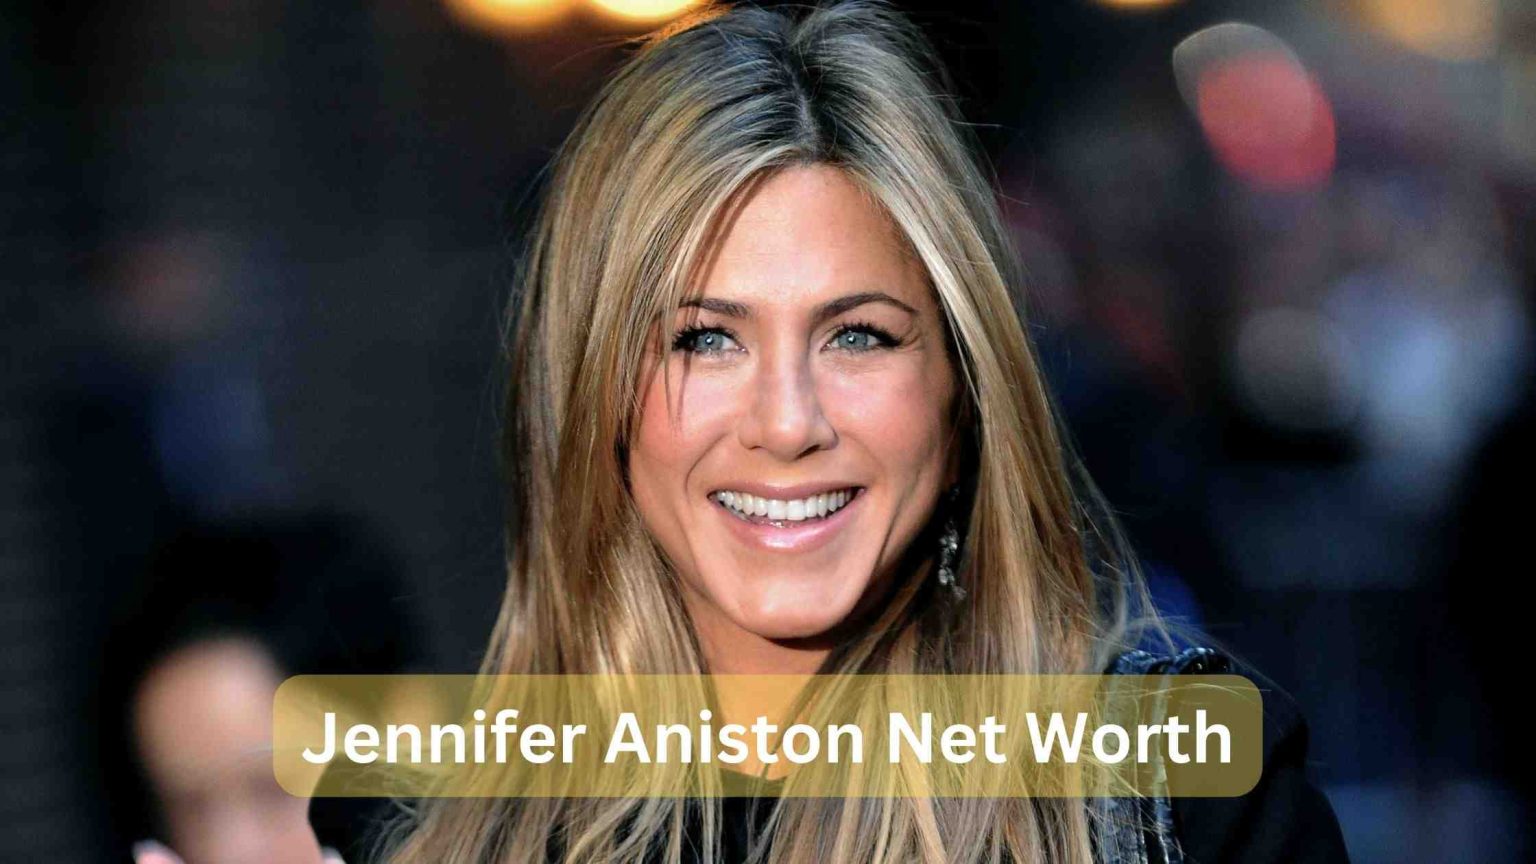 Jennifer Aniston Net Worth, Biography, and Family